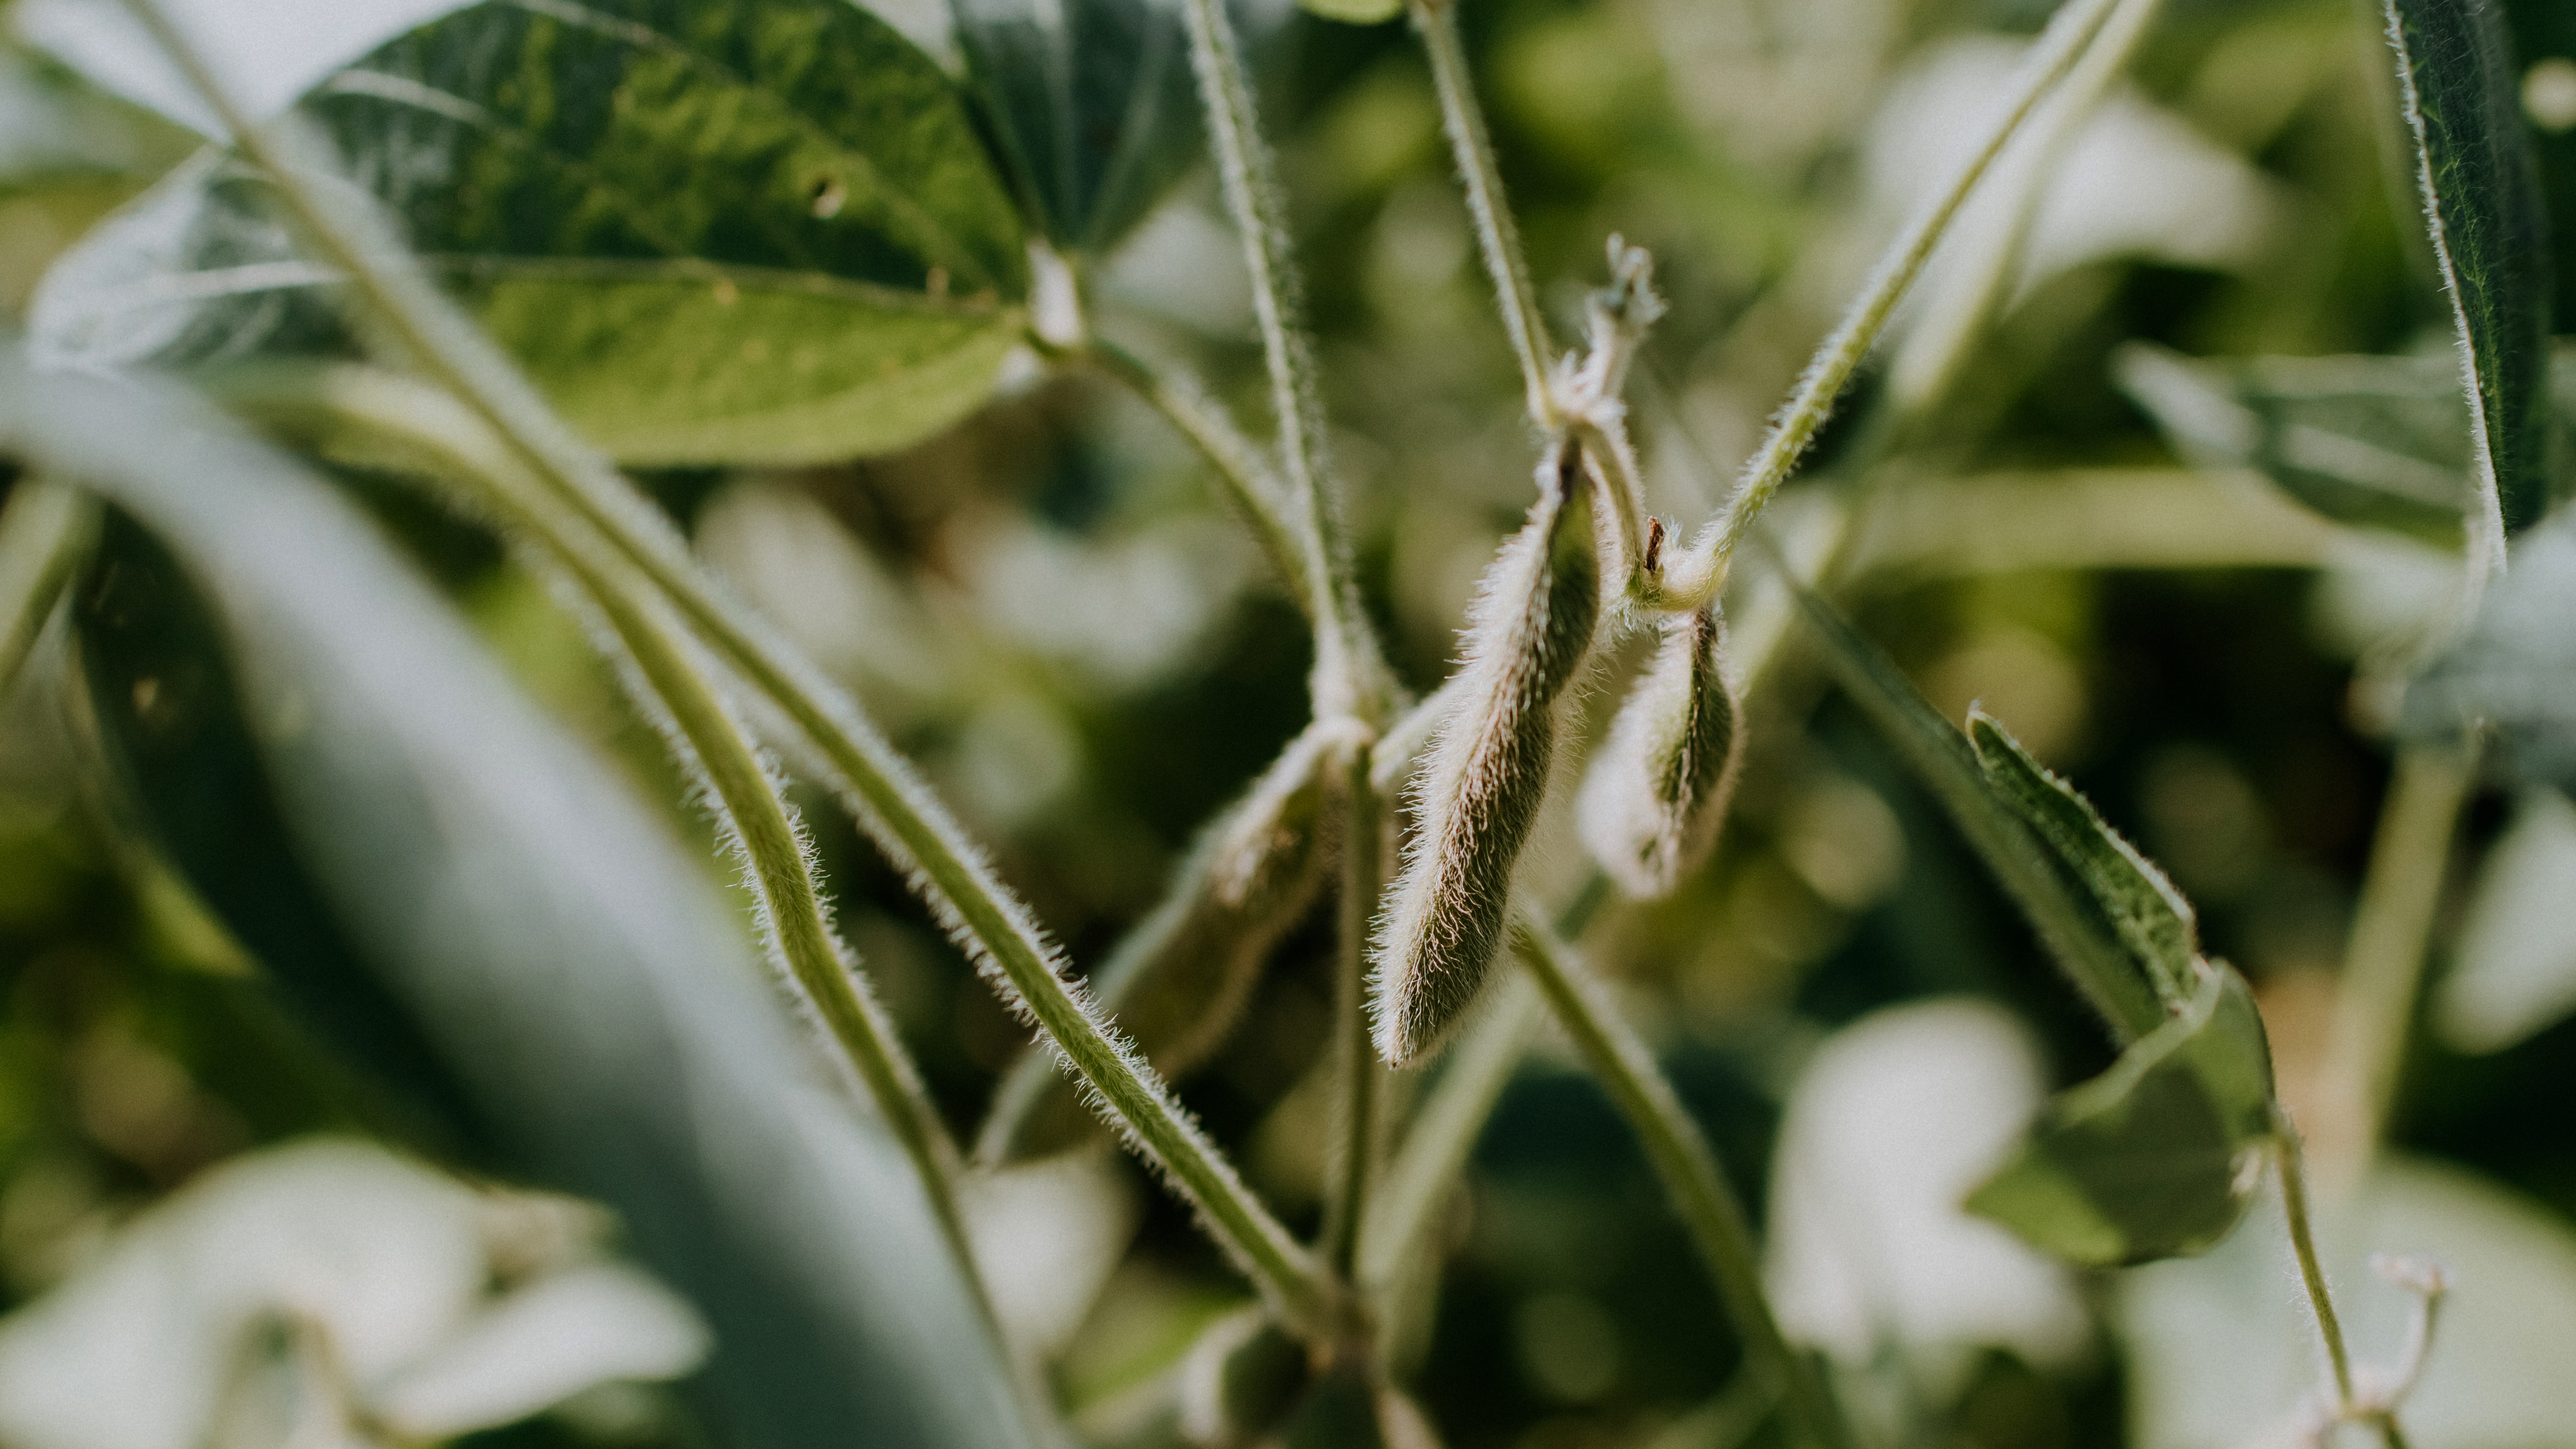 Soybean – Brazil: USDA Forecast A Record Brazil Soybean Crop, Could La Nina Thwart it?